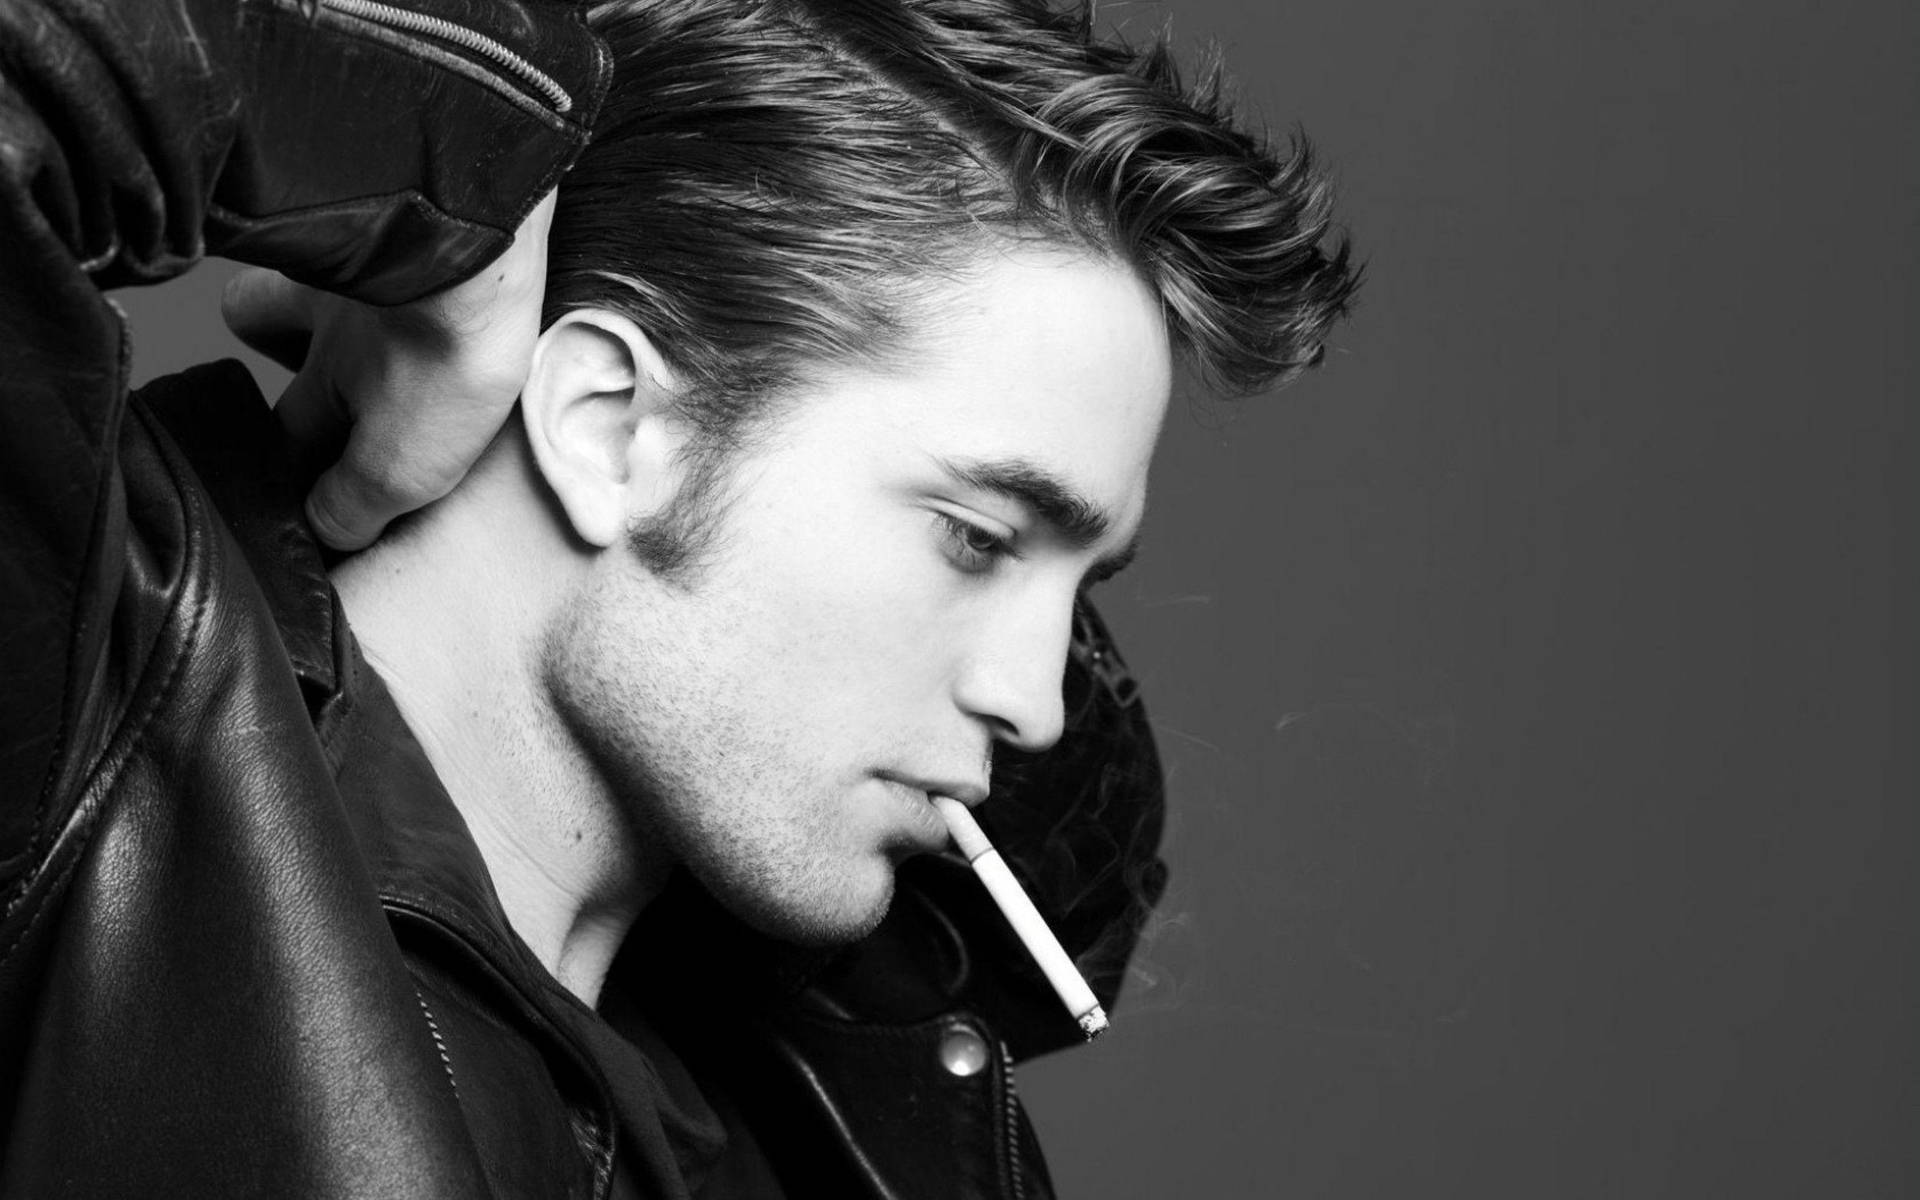 Robert Pattinson With Cigarette Background